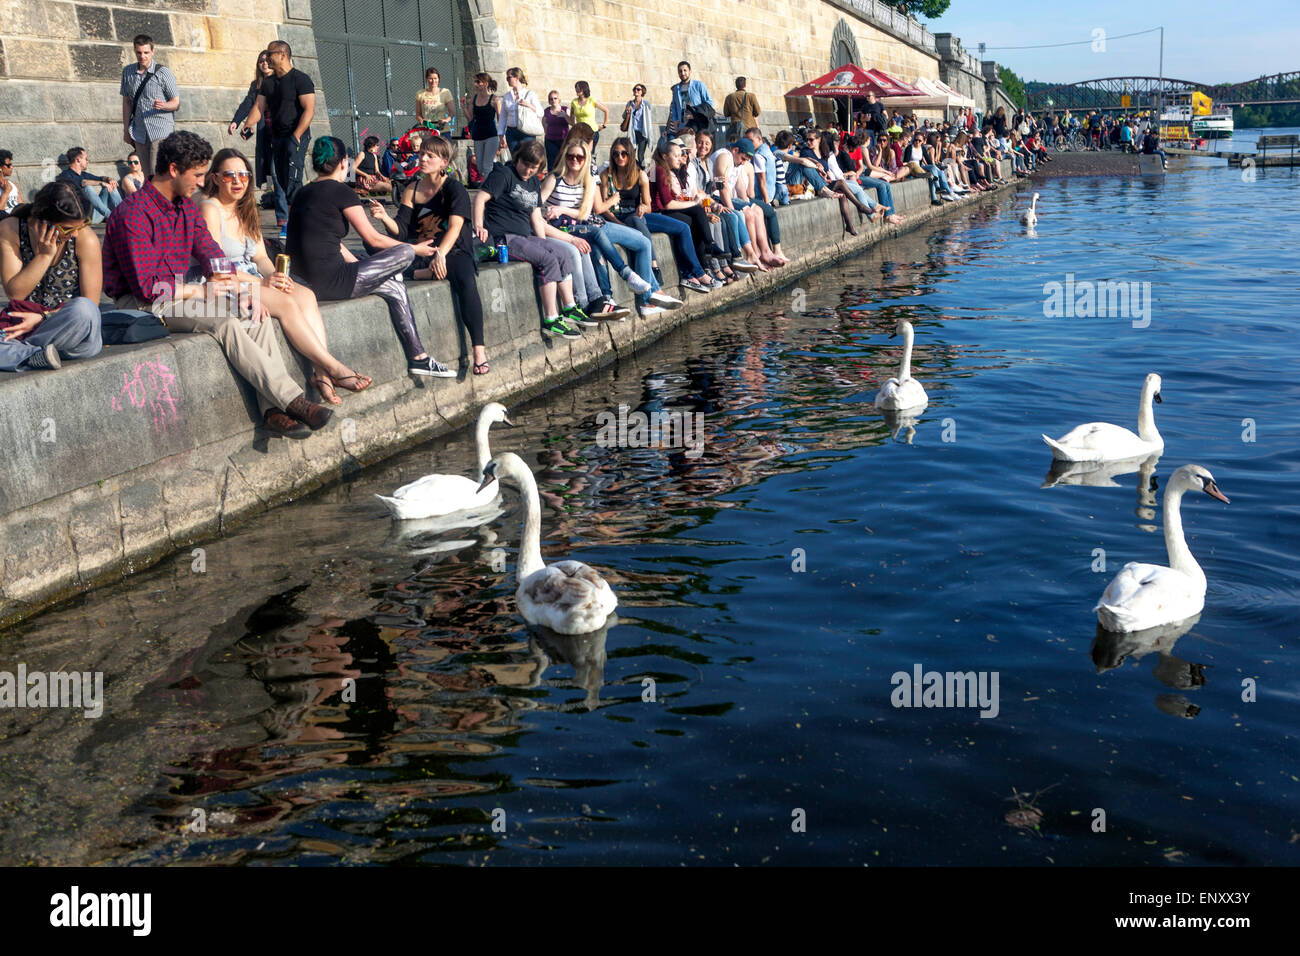 A crowd of people Prague River Czech Republic Europe city river Vltava in Prague Stock Photo